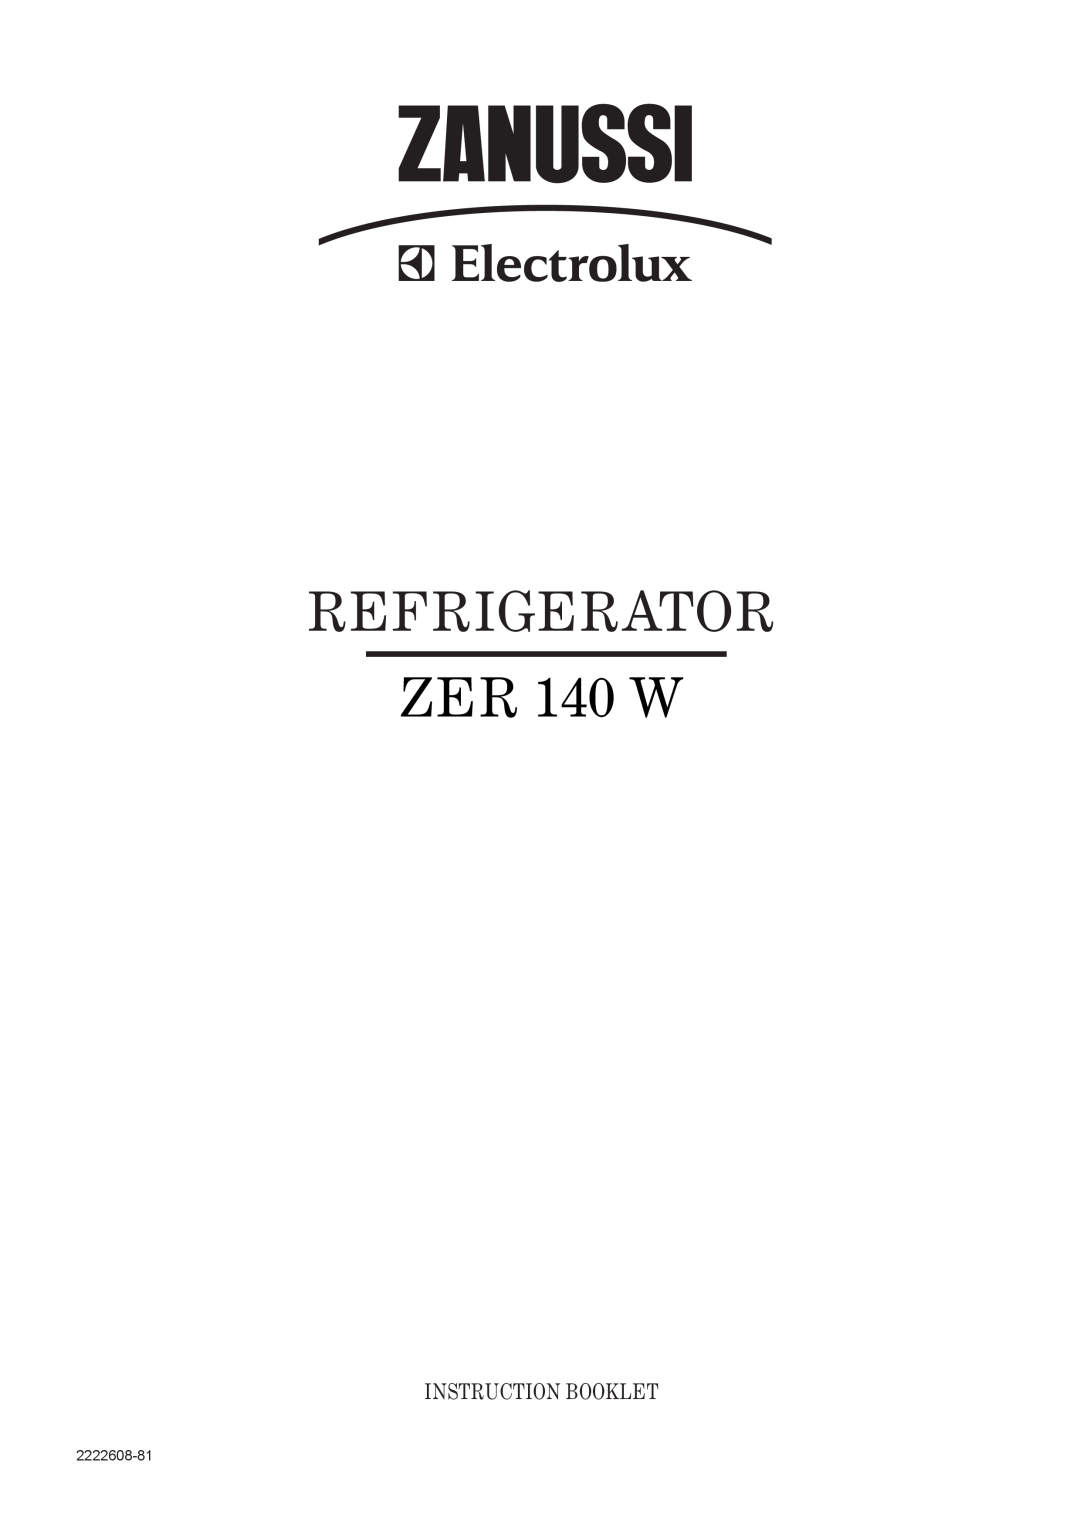 Zanussi ZER 140 W manual Refrigerator, Instruction Booklet, 2222608-81 